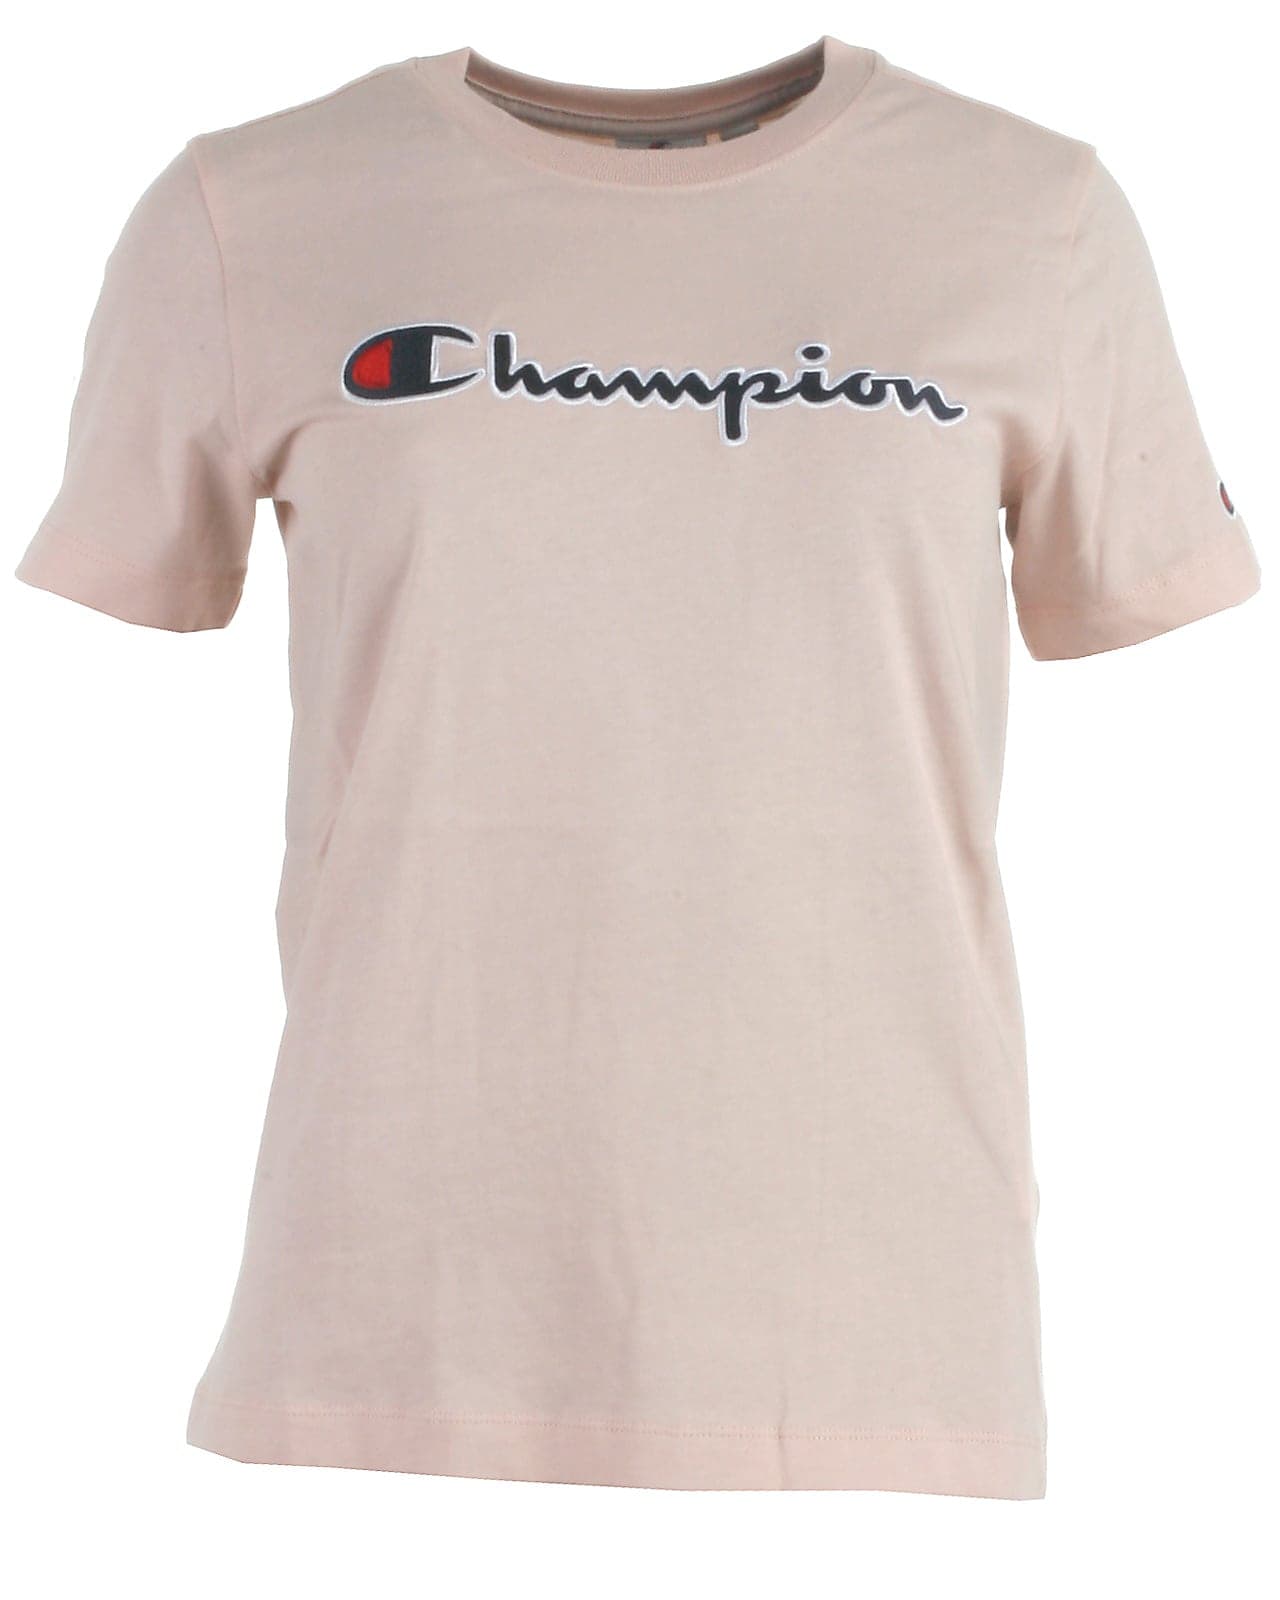 Champion t-shirt s/s